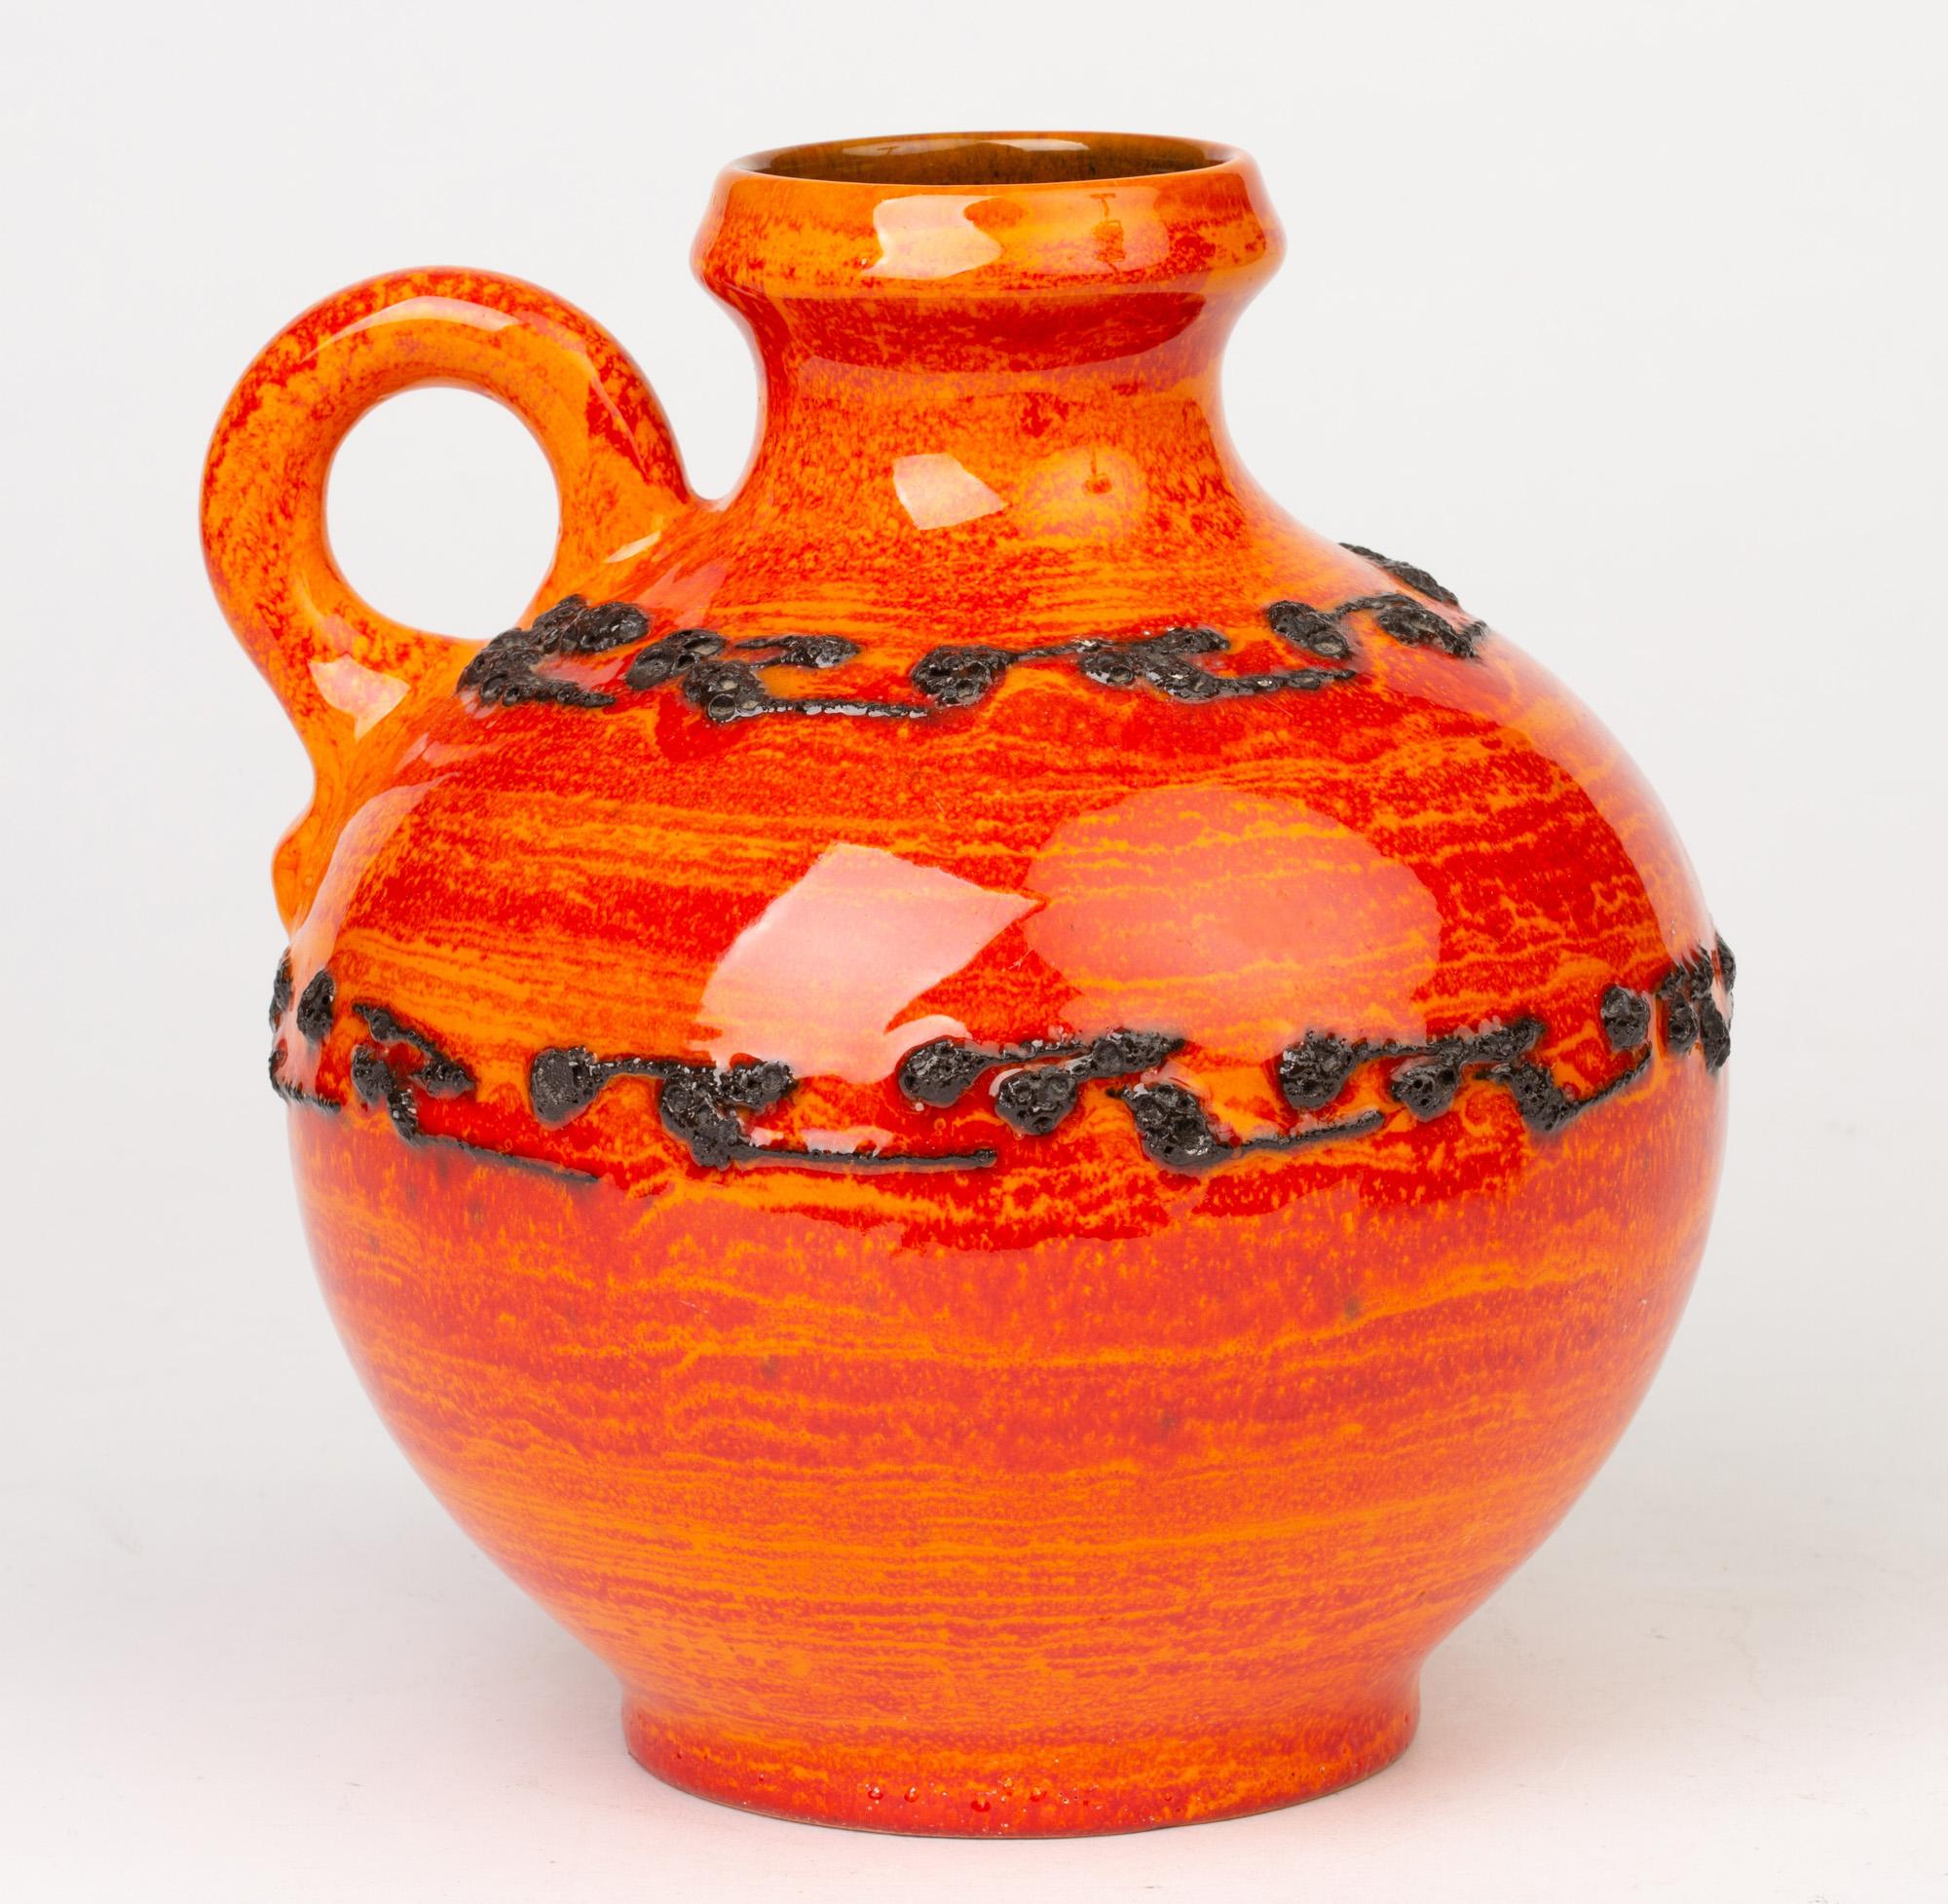 Kreutz Keramik German Midcentury Orange and Red Fat Lava Handled Vase In Good Condition For Sale In Bishop's Stortford, Hertfordshire